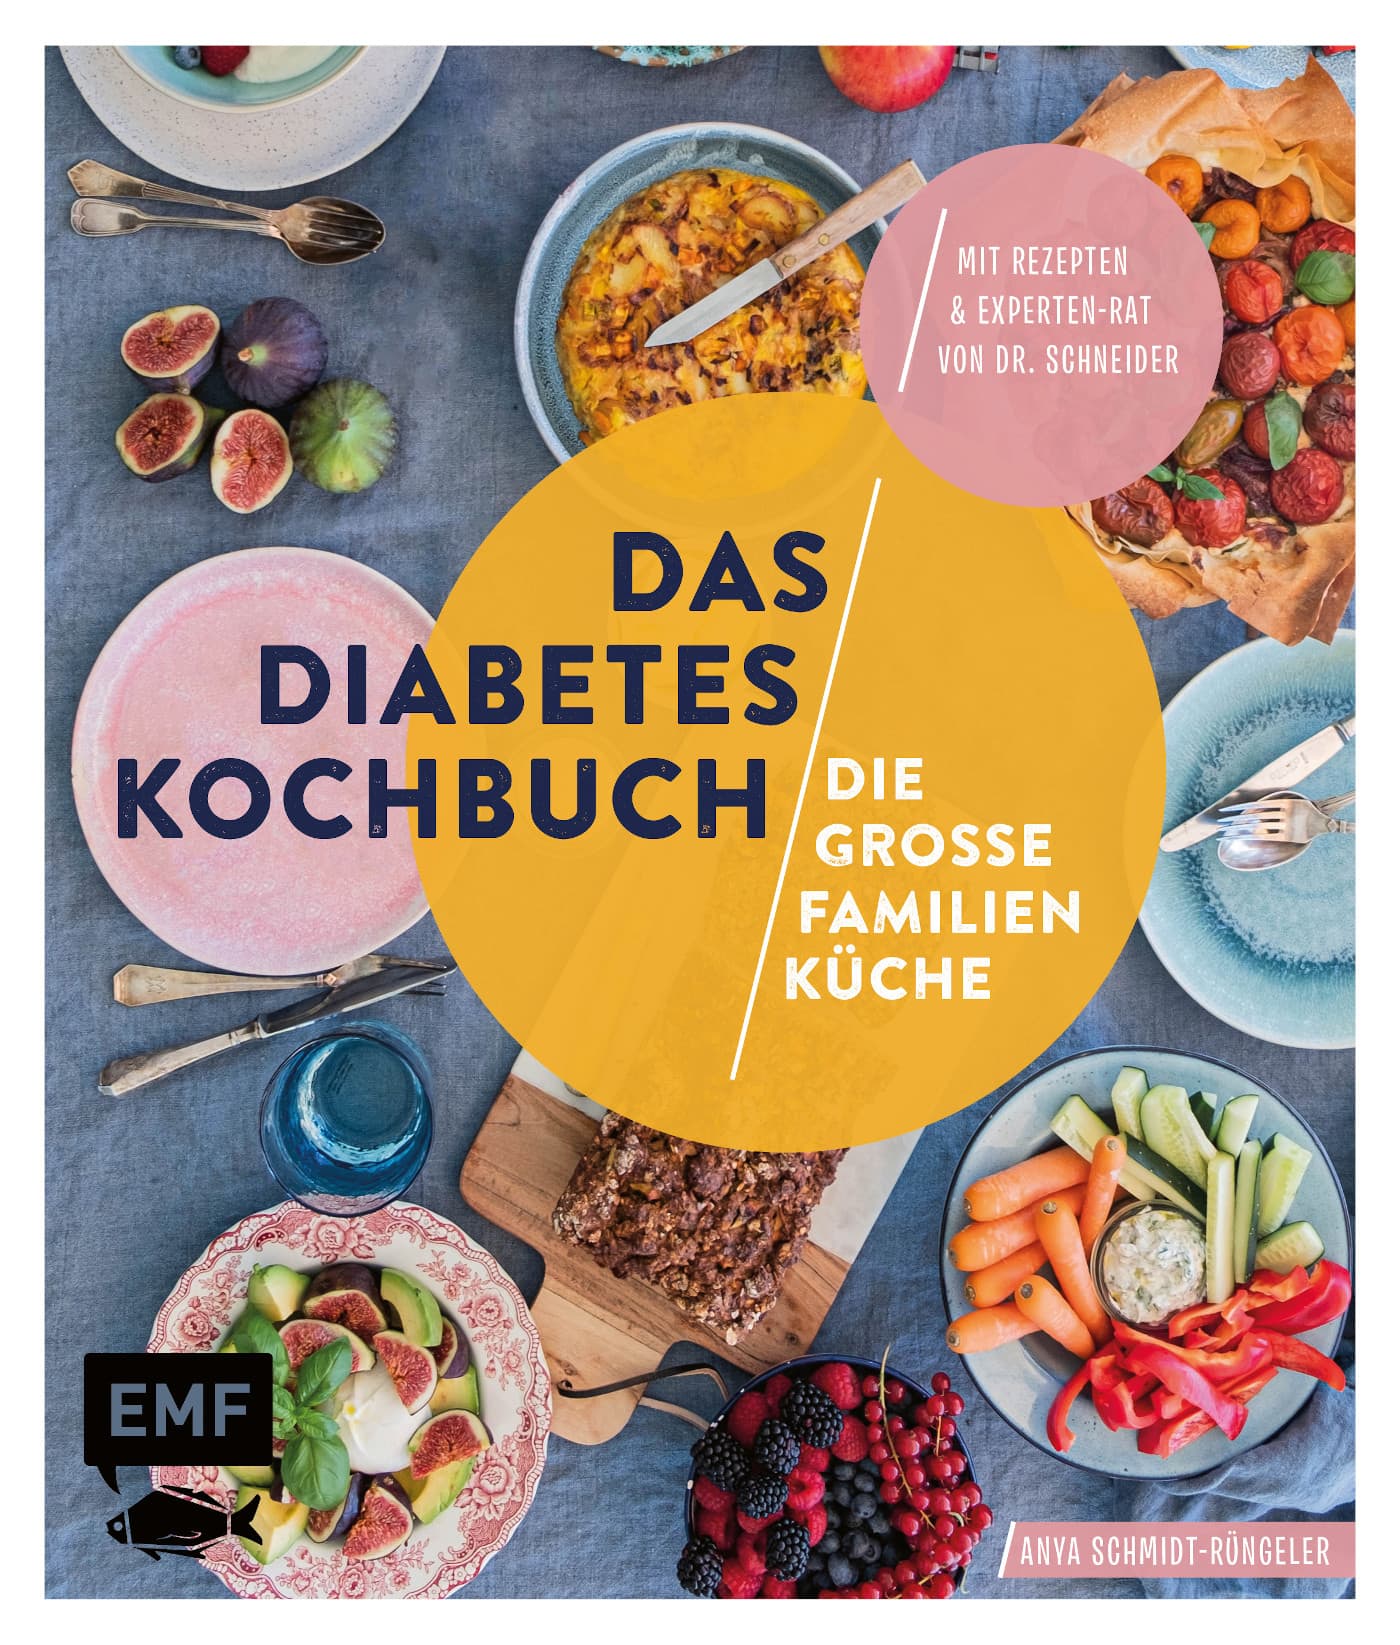 Das Diabetes Kochbuch // HIMBEER